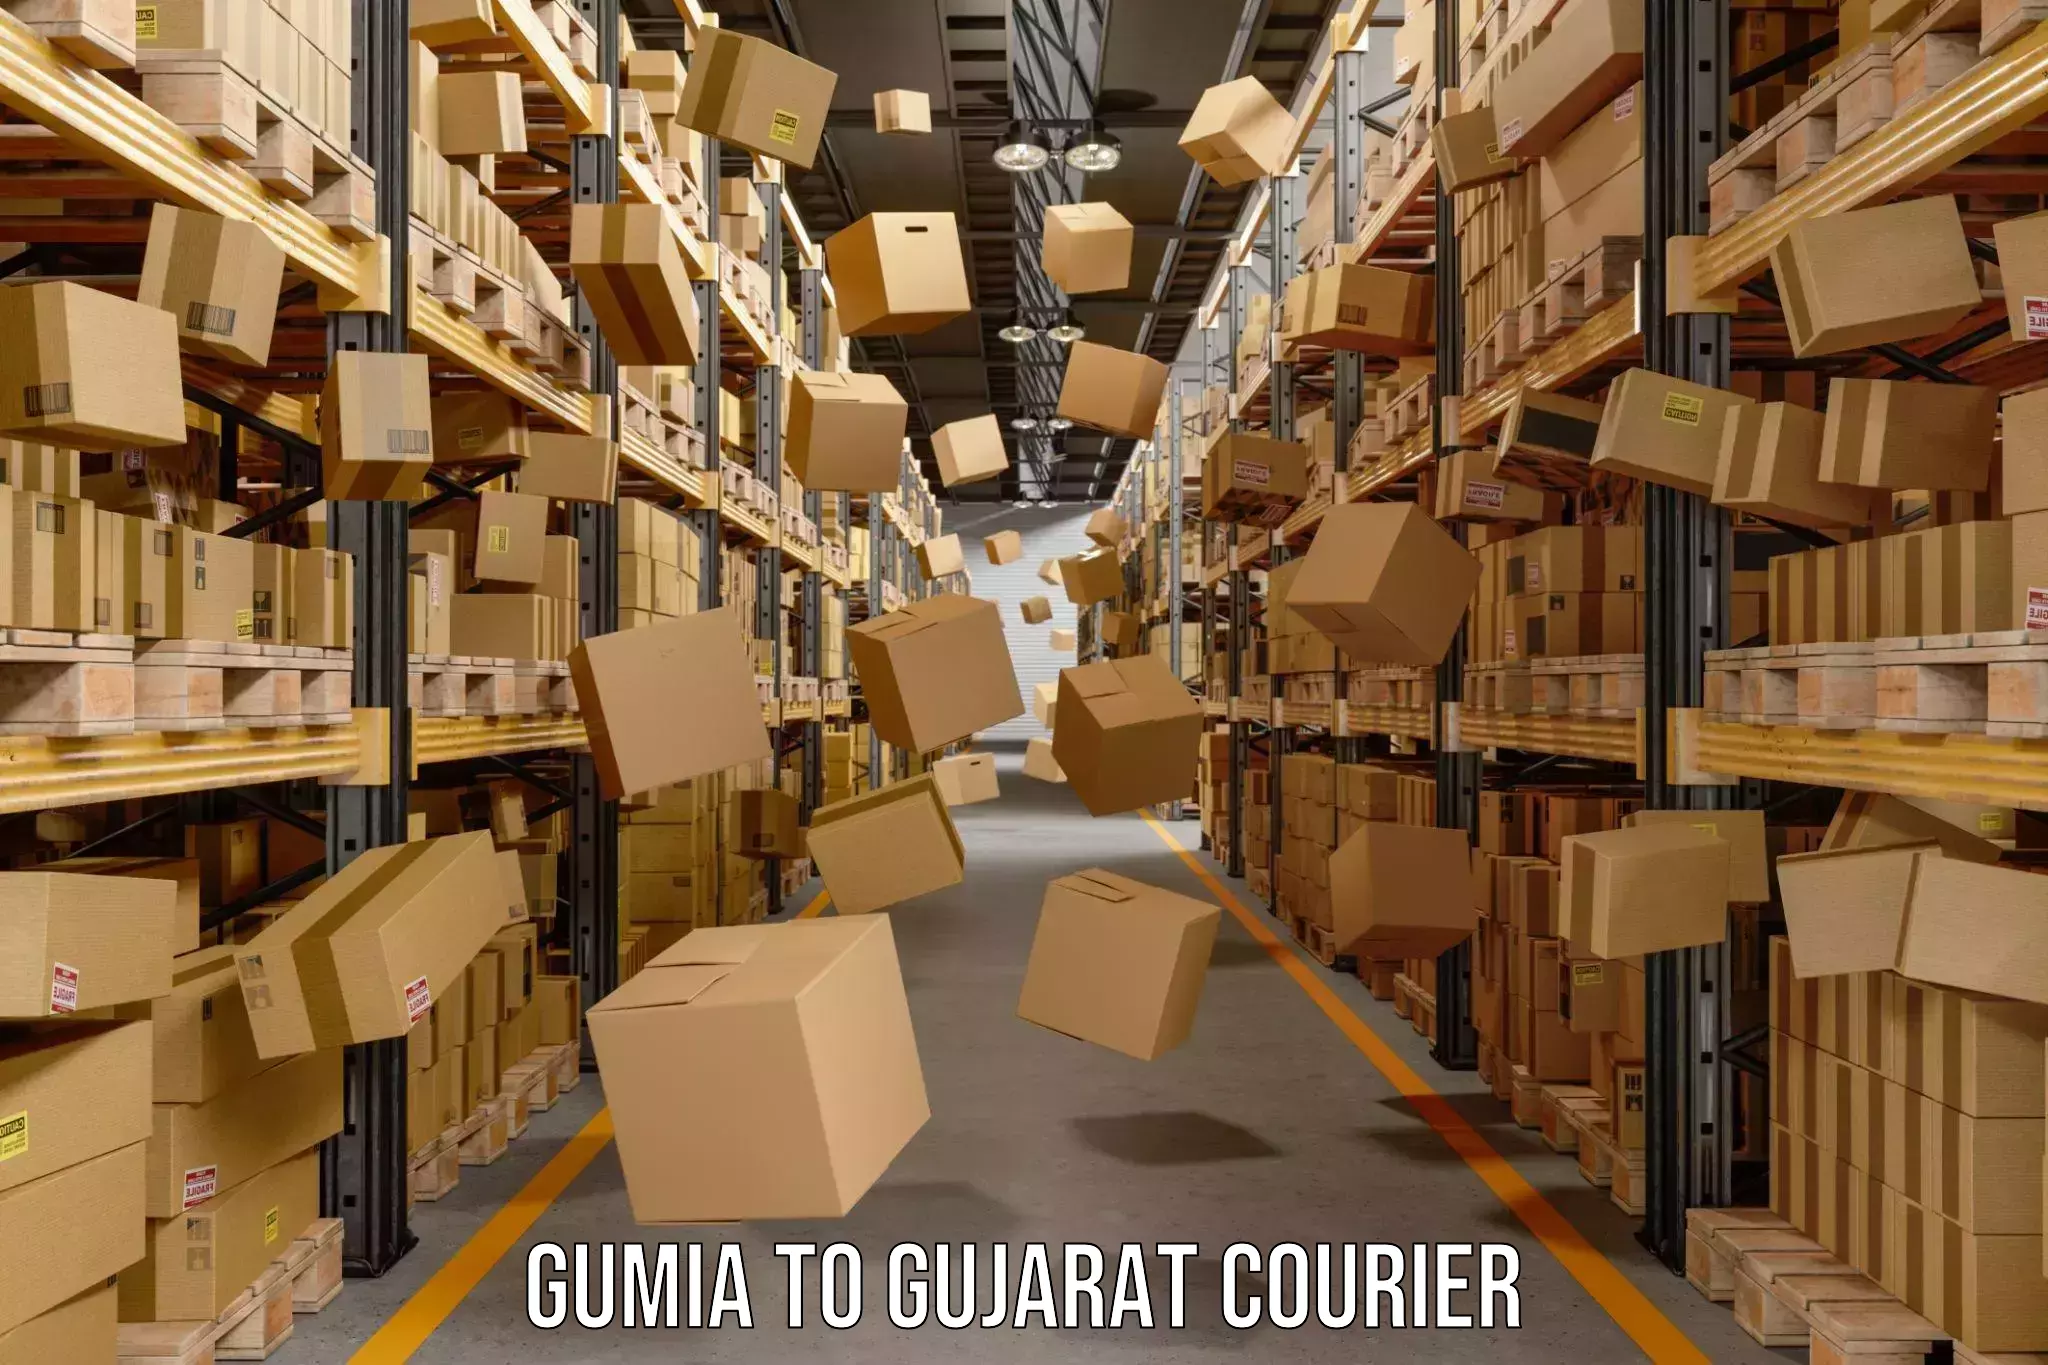 Courier service comparison in Gumia to Kadodara